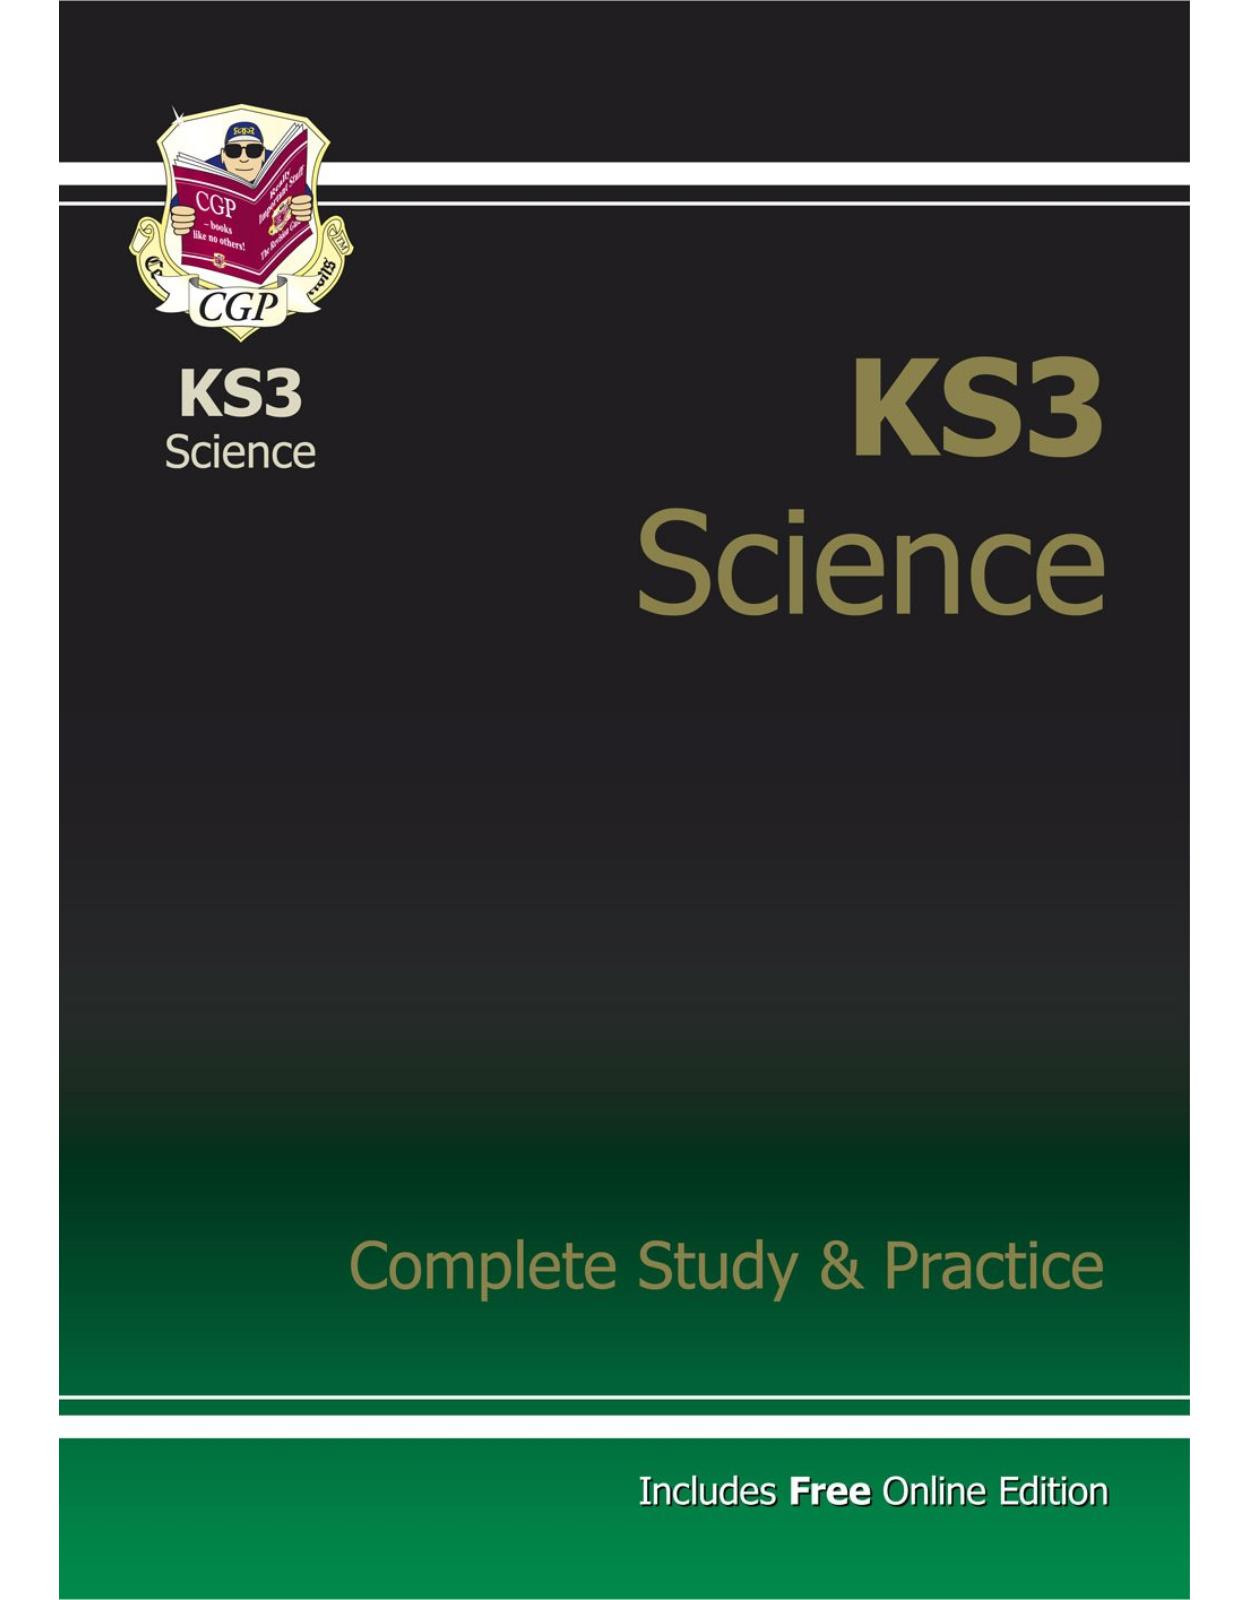 KS3 Science: Complete Study & Practice